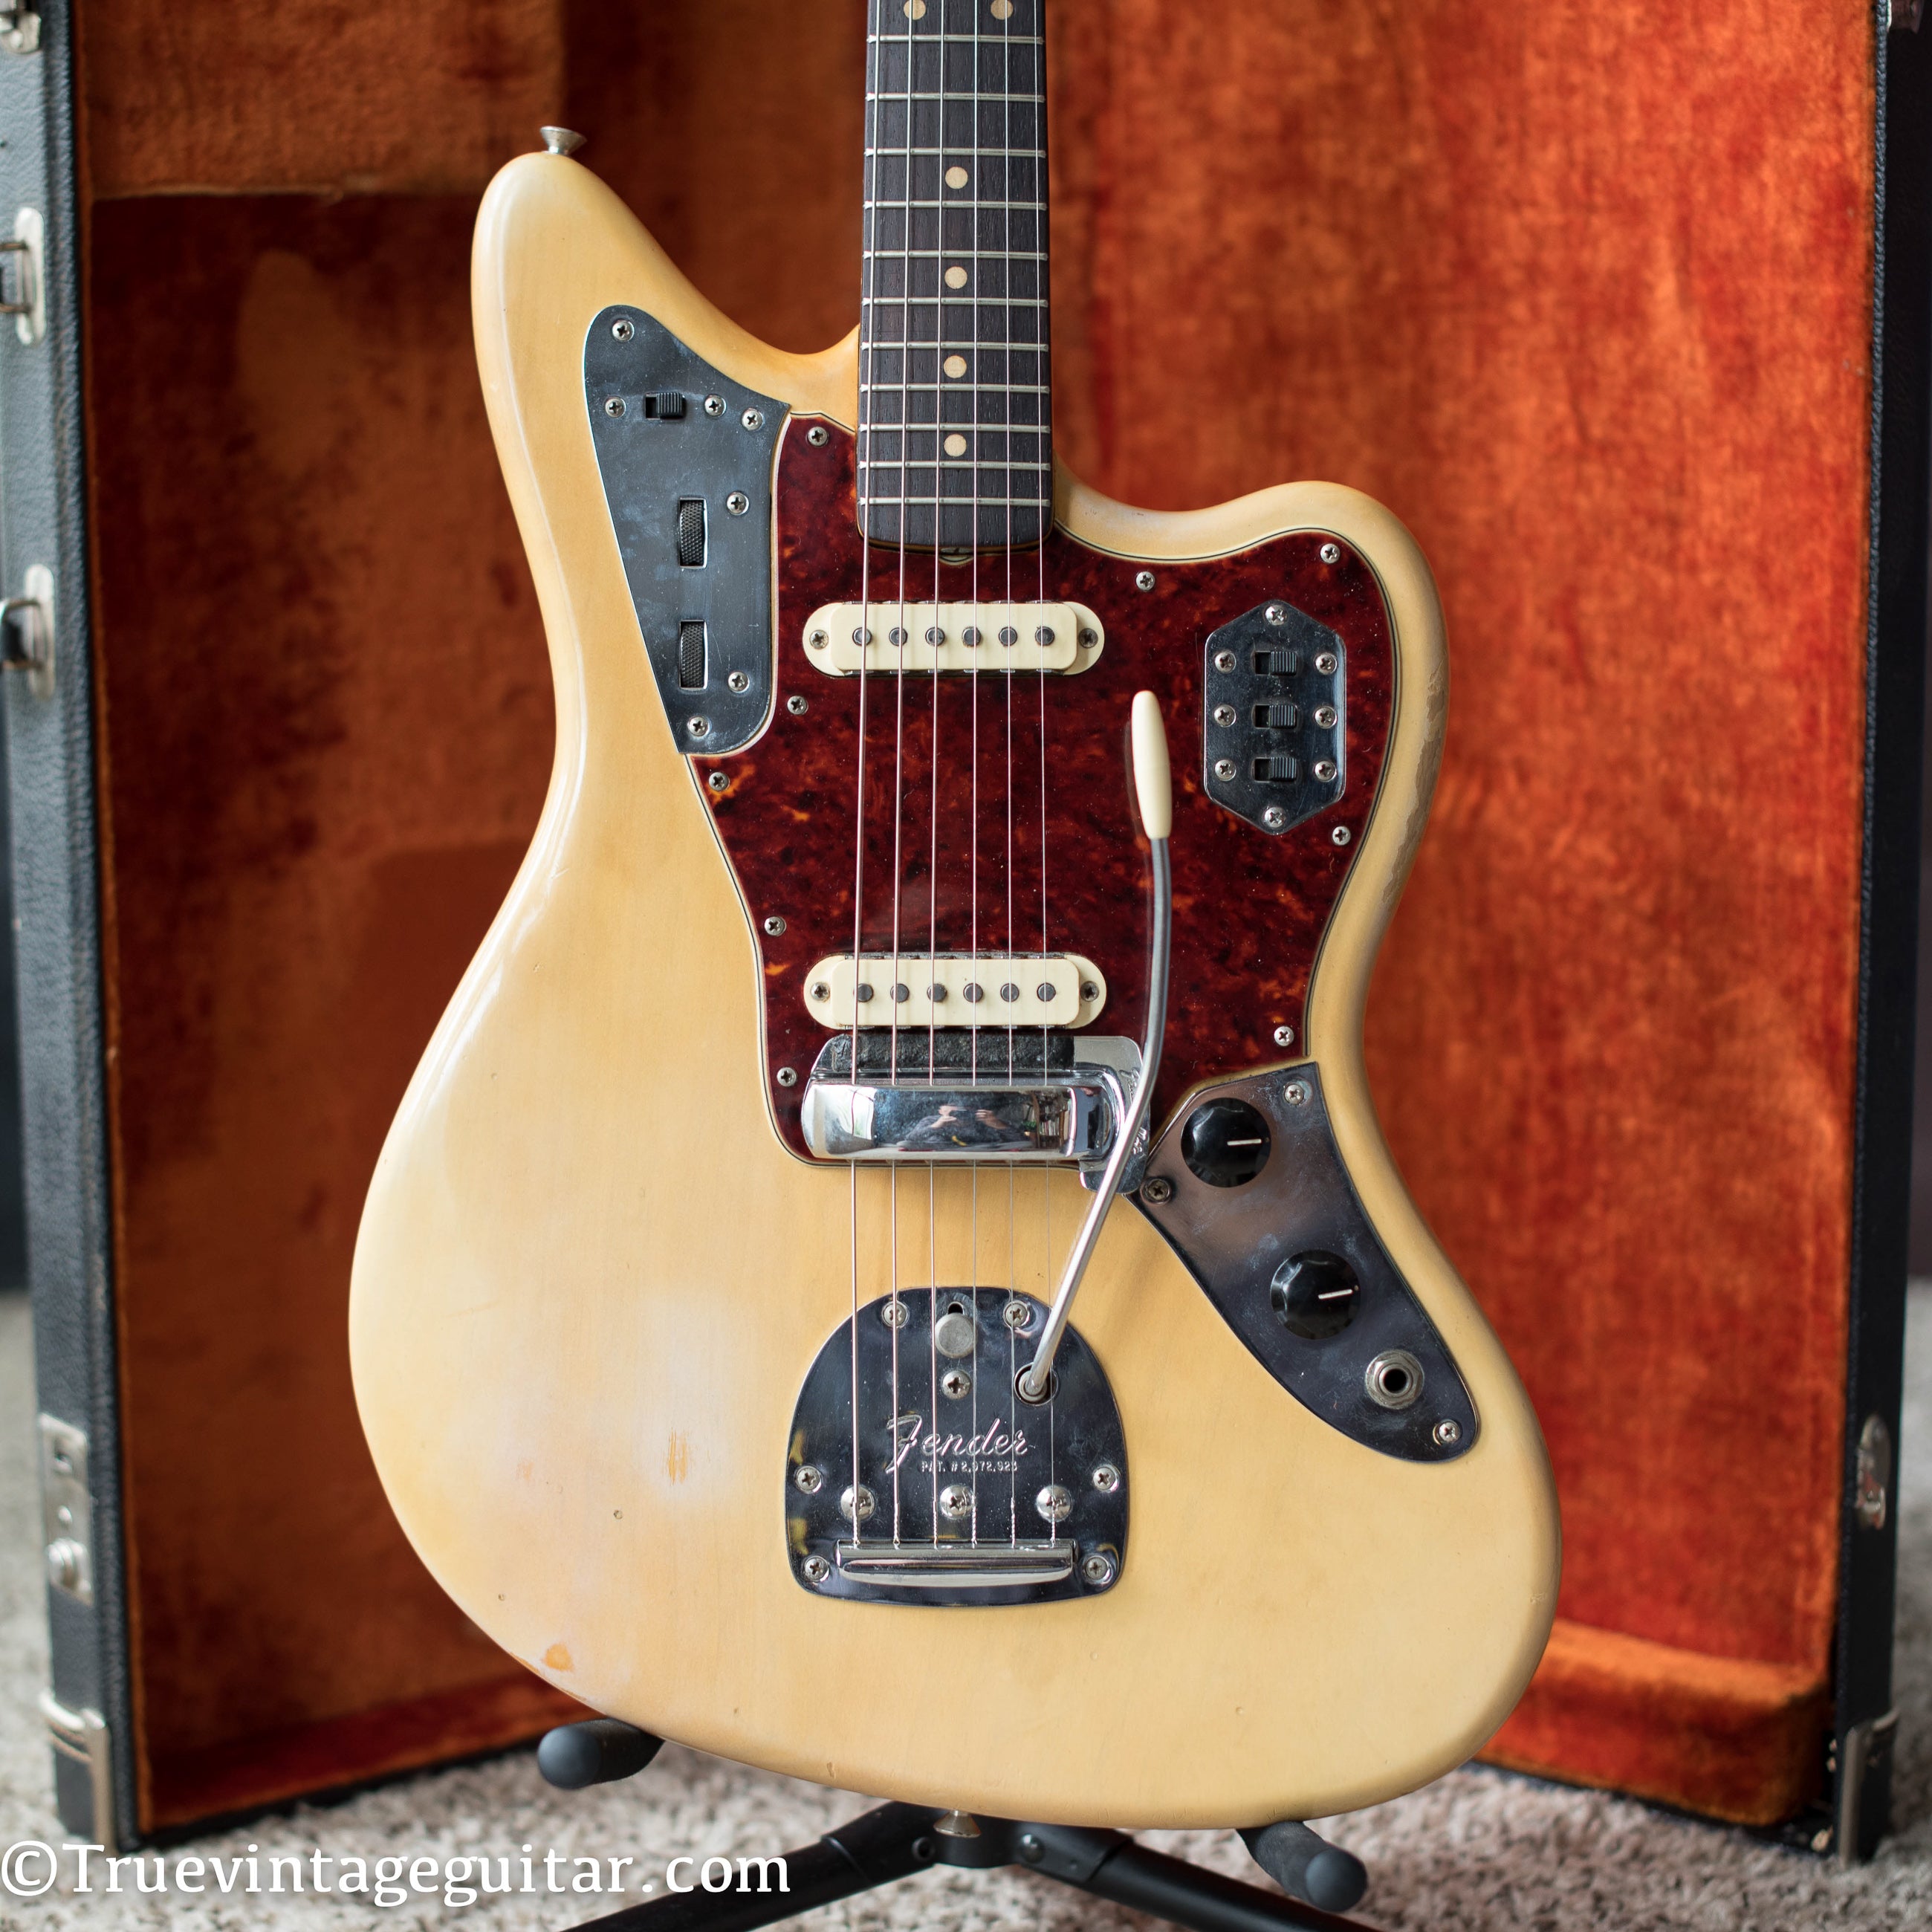 1964 Fender Jaguar Blond finish Ash body